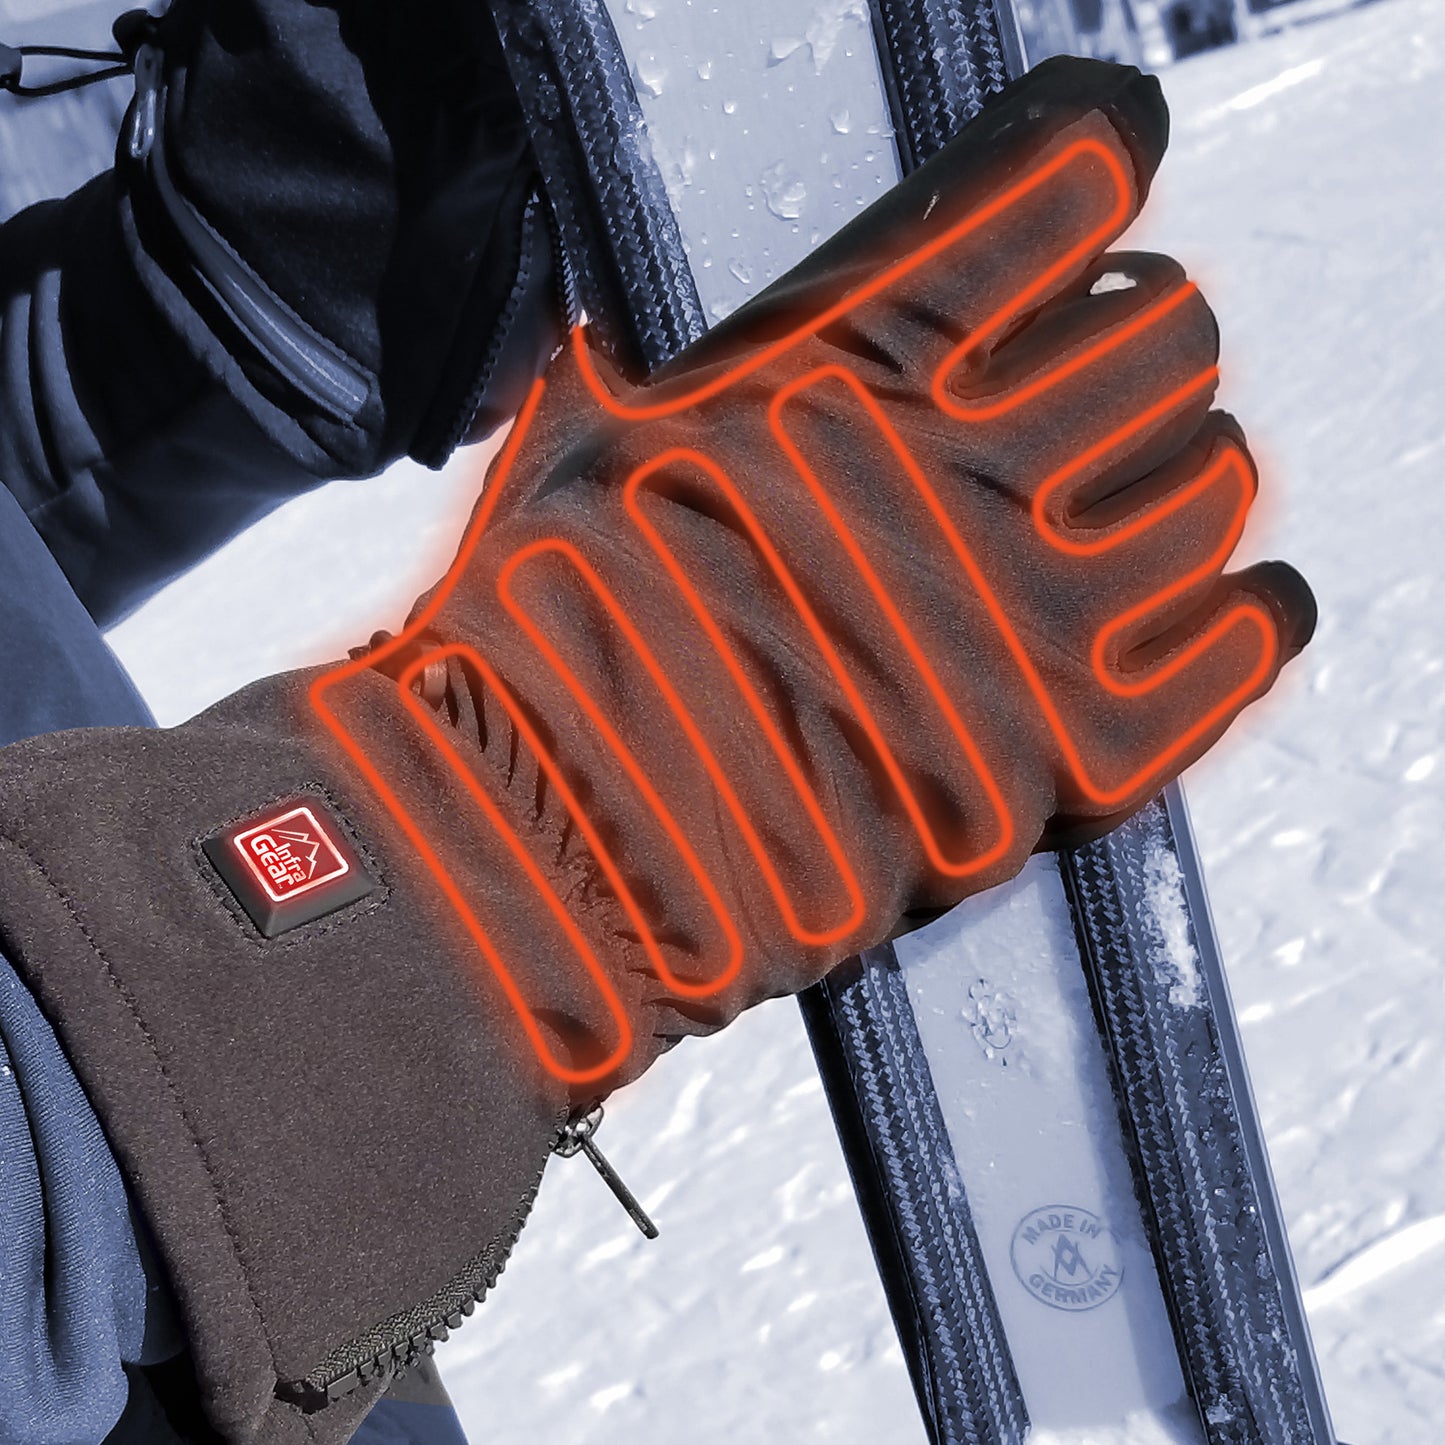 Infra Gear Heated Gloves